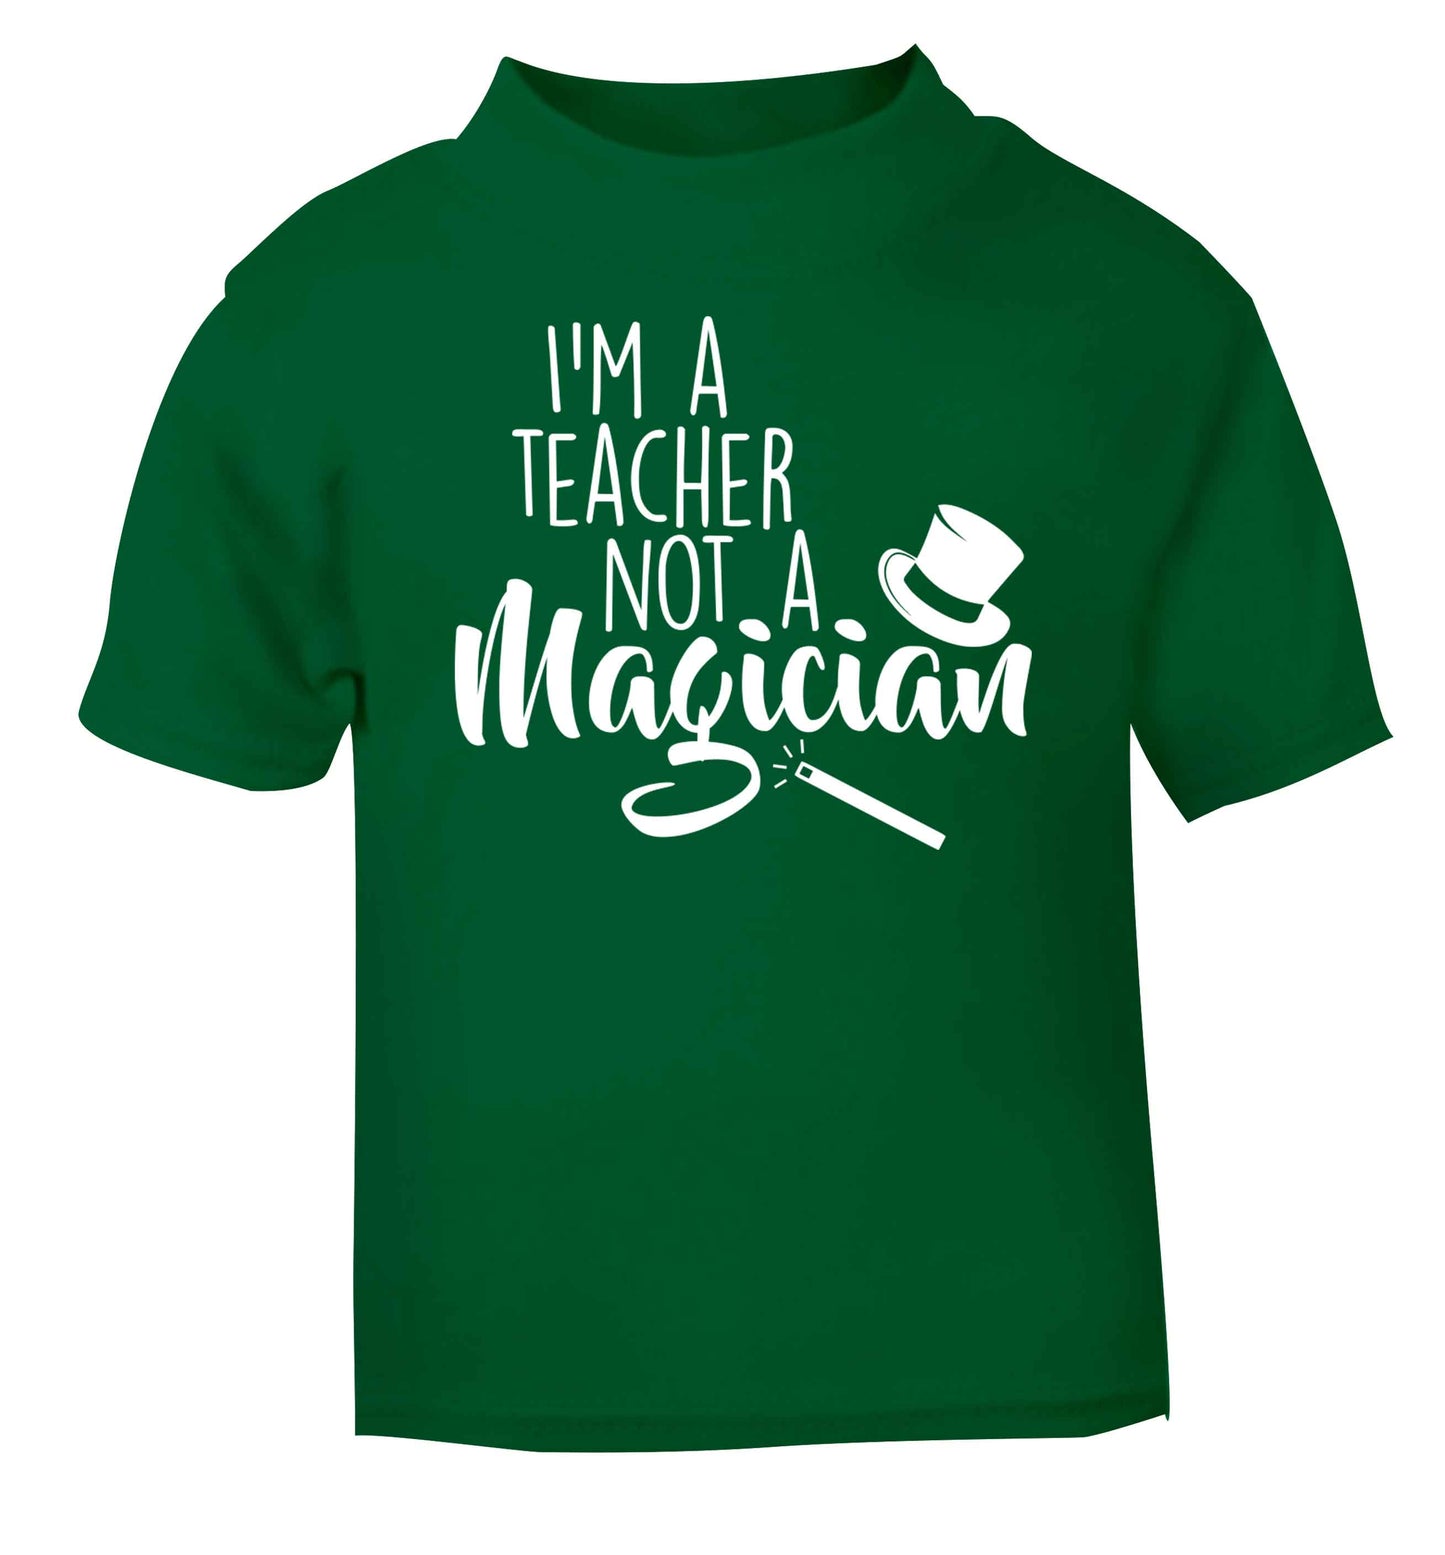 I'm a teacher not a magician green baby toddler Tshirt 2 Years